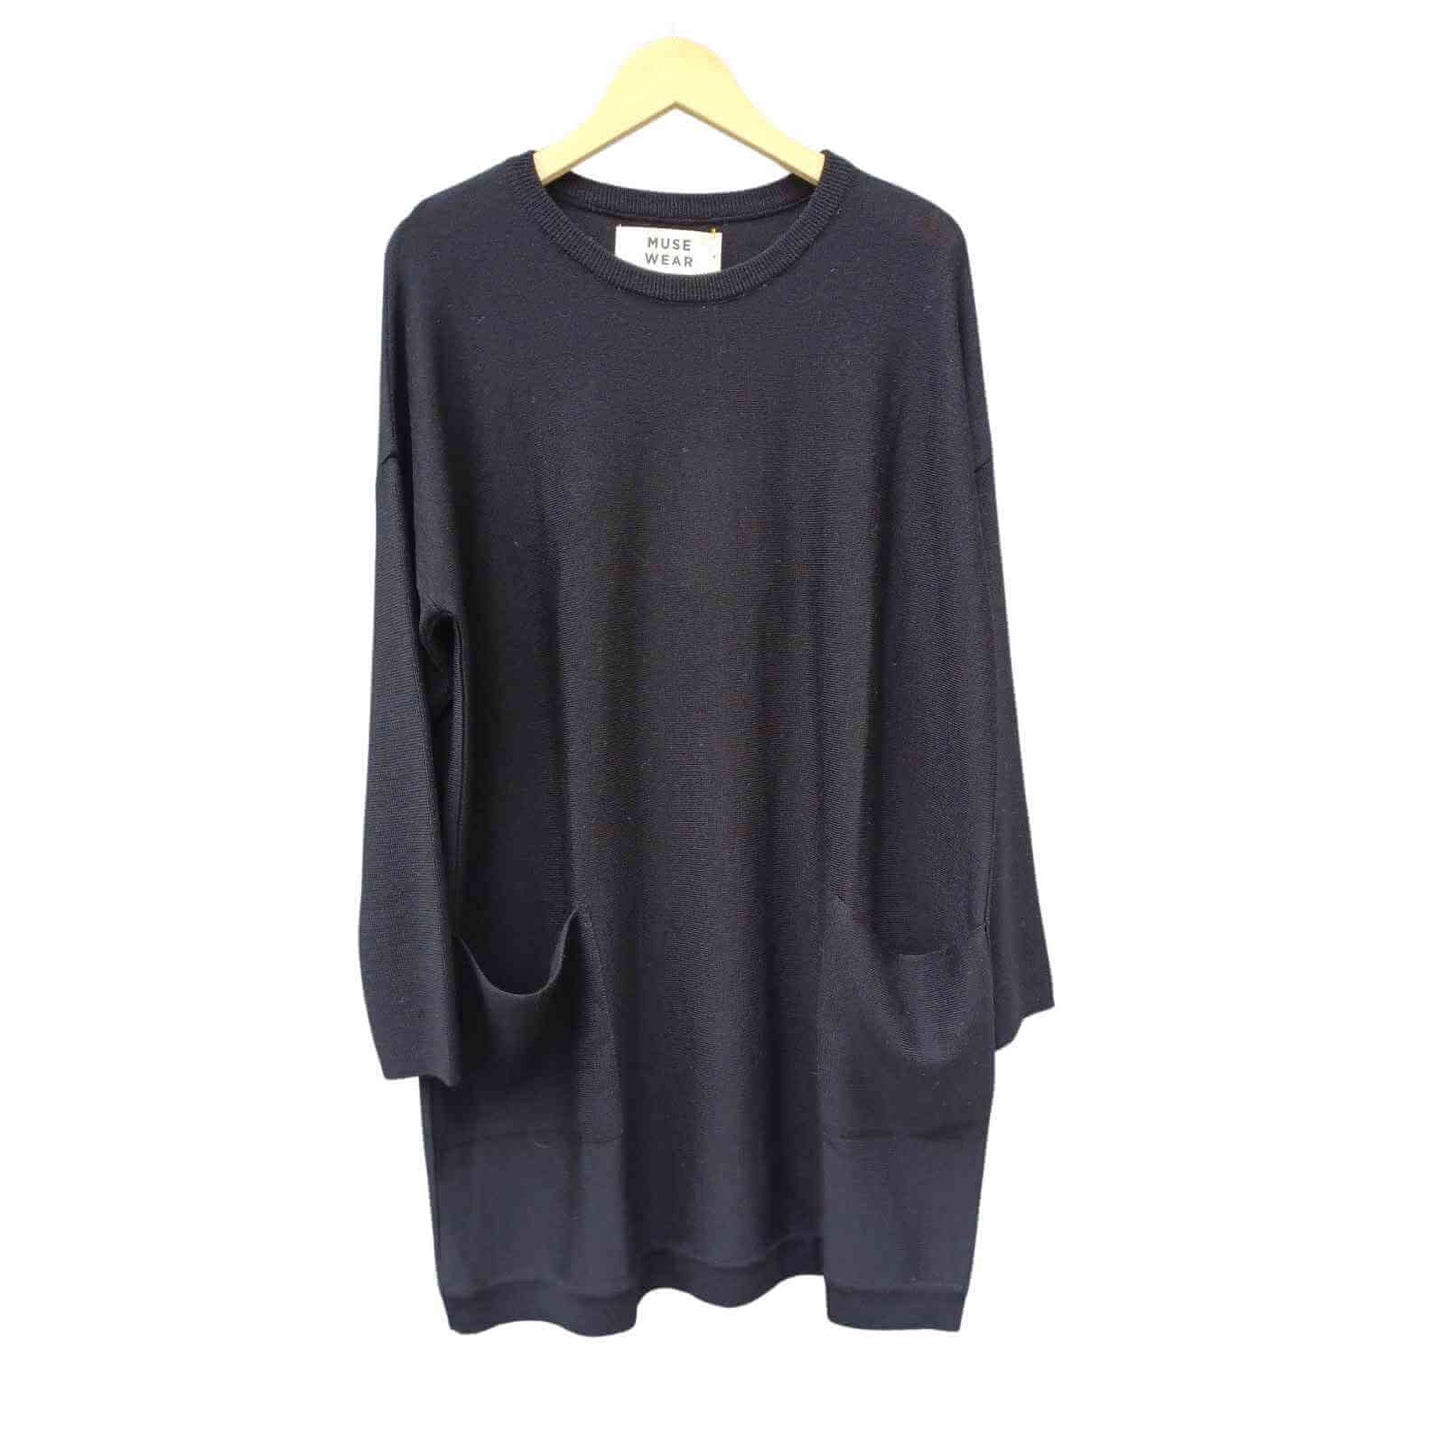 Sort uld tunika i 100% merinould fra Muse Wear